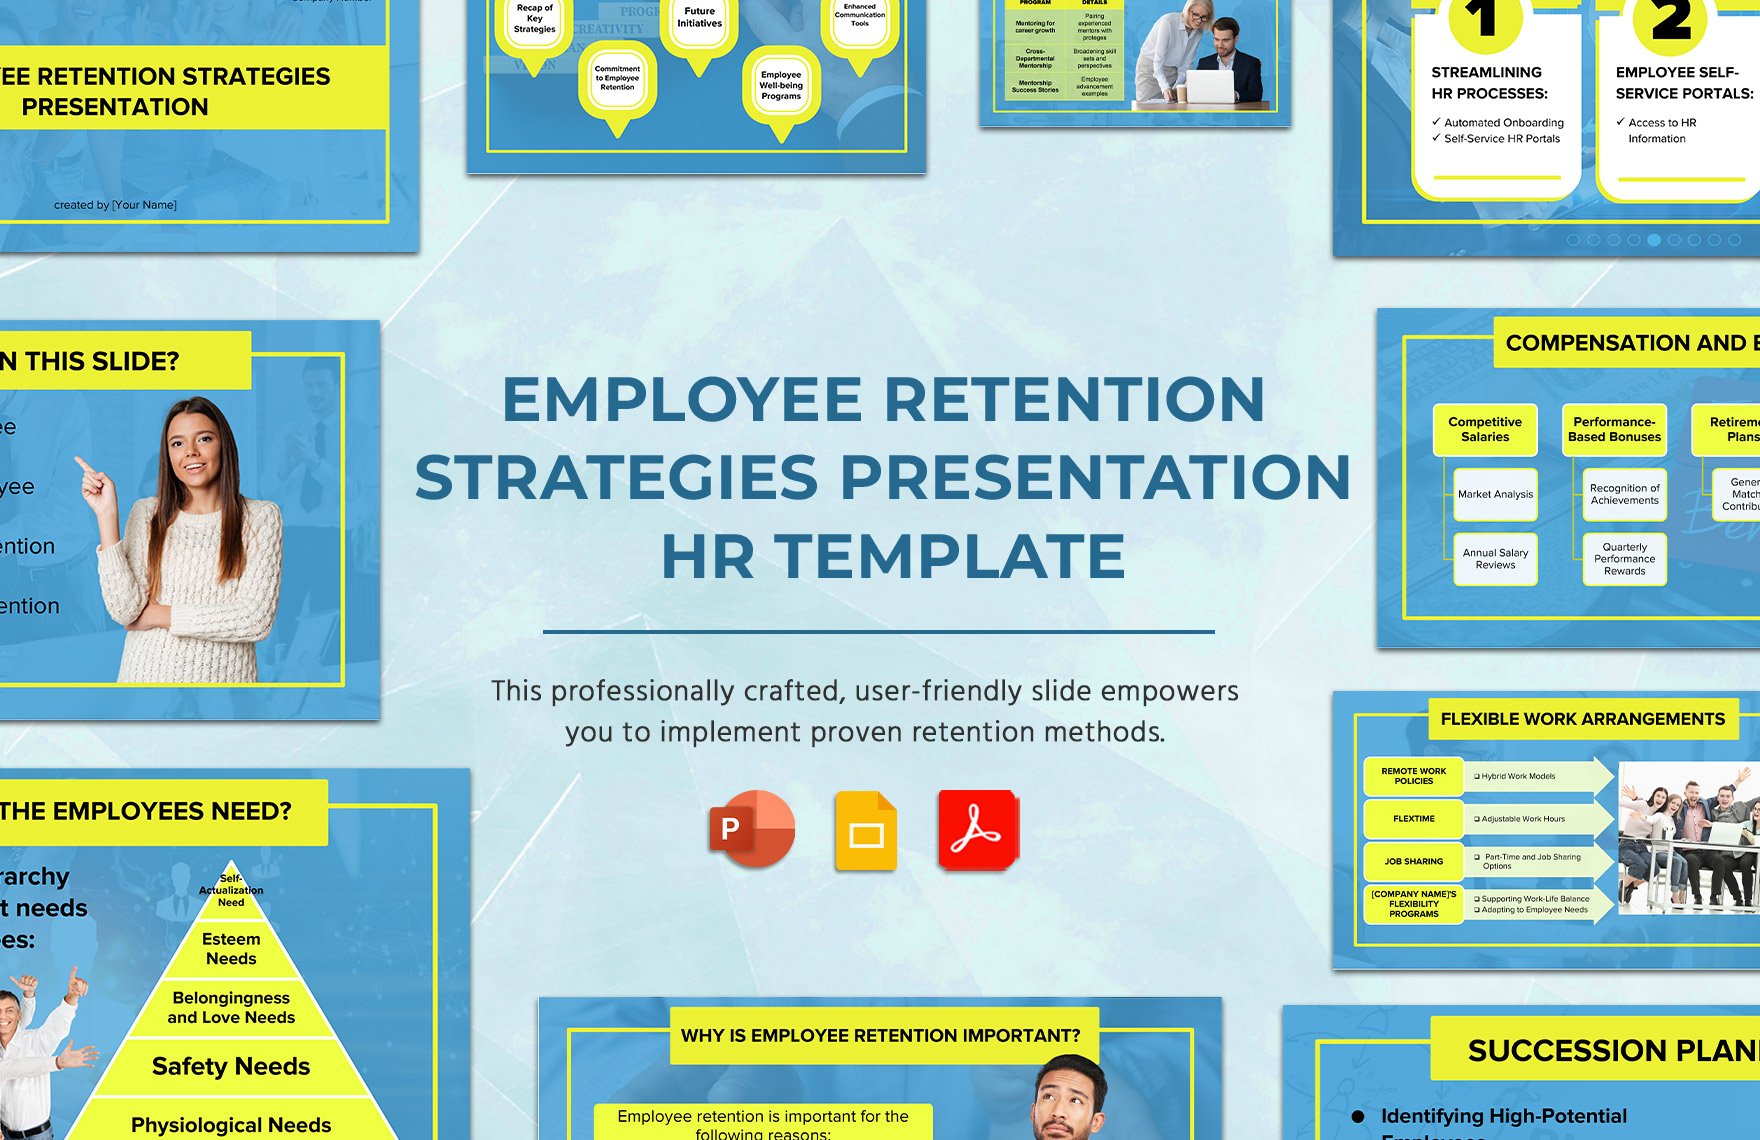 Employee Retention Strategies Presentation HR Template